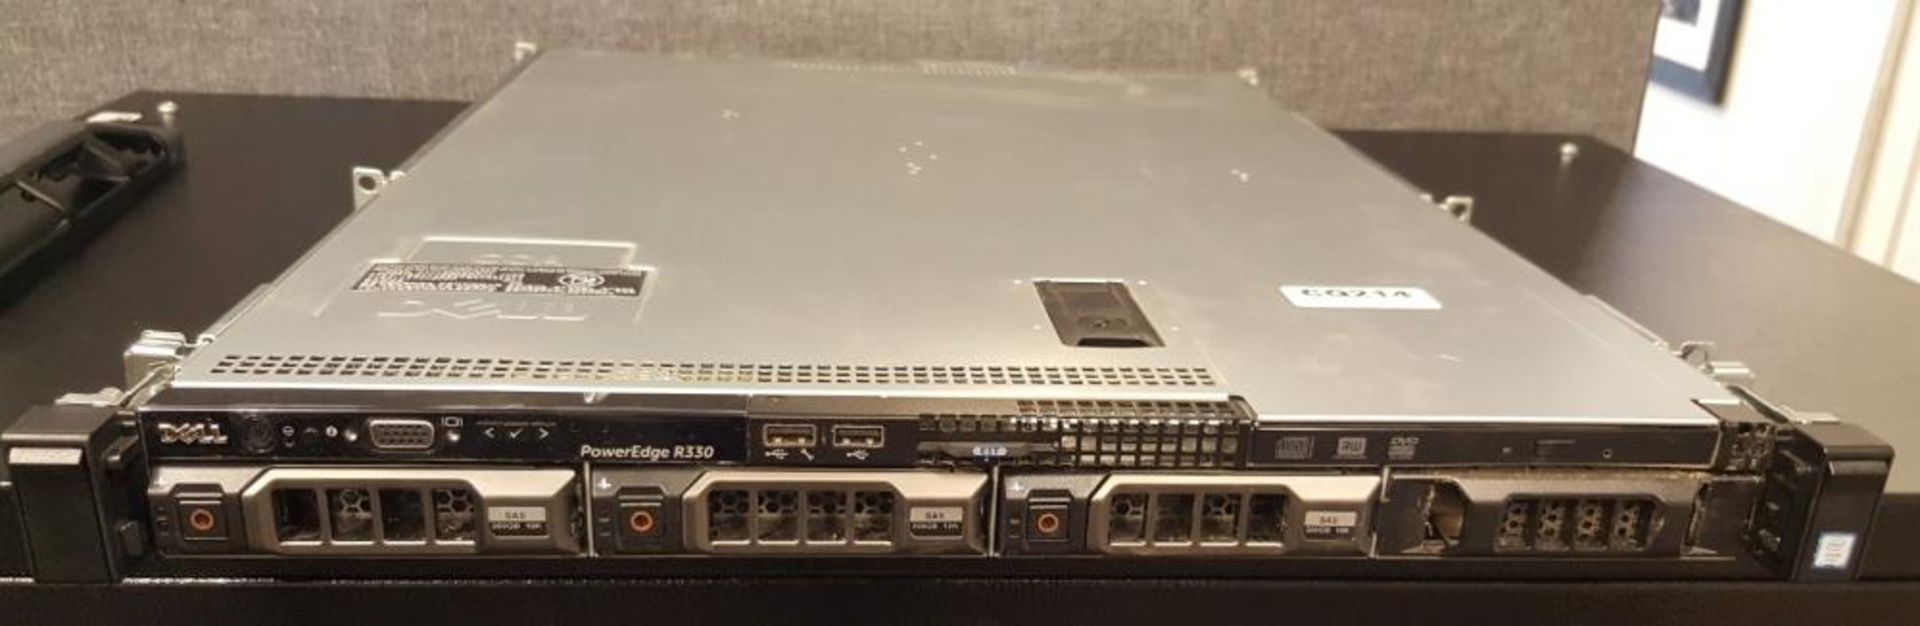 1 x Dell PowerEdge R330 1U Rack Server With Intel Xeon E3-1220V6 3 GHz &amp; 32GB RAM - Ref CQ214 - - Bild 5 aus 10